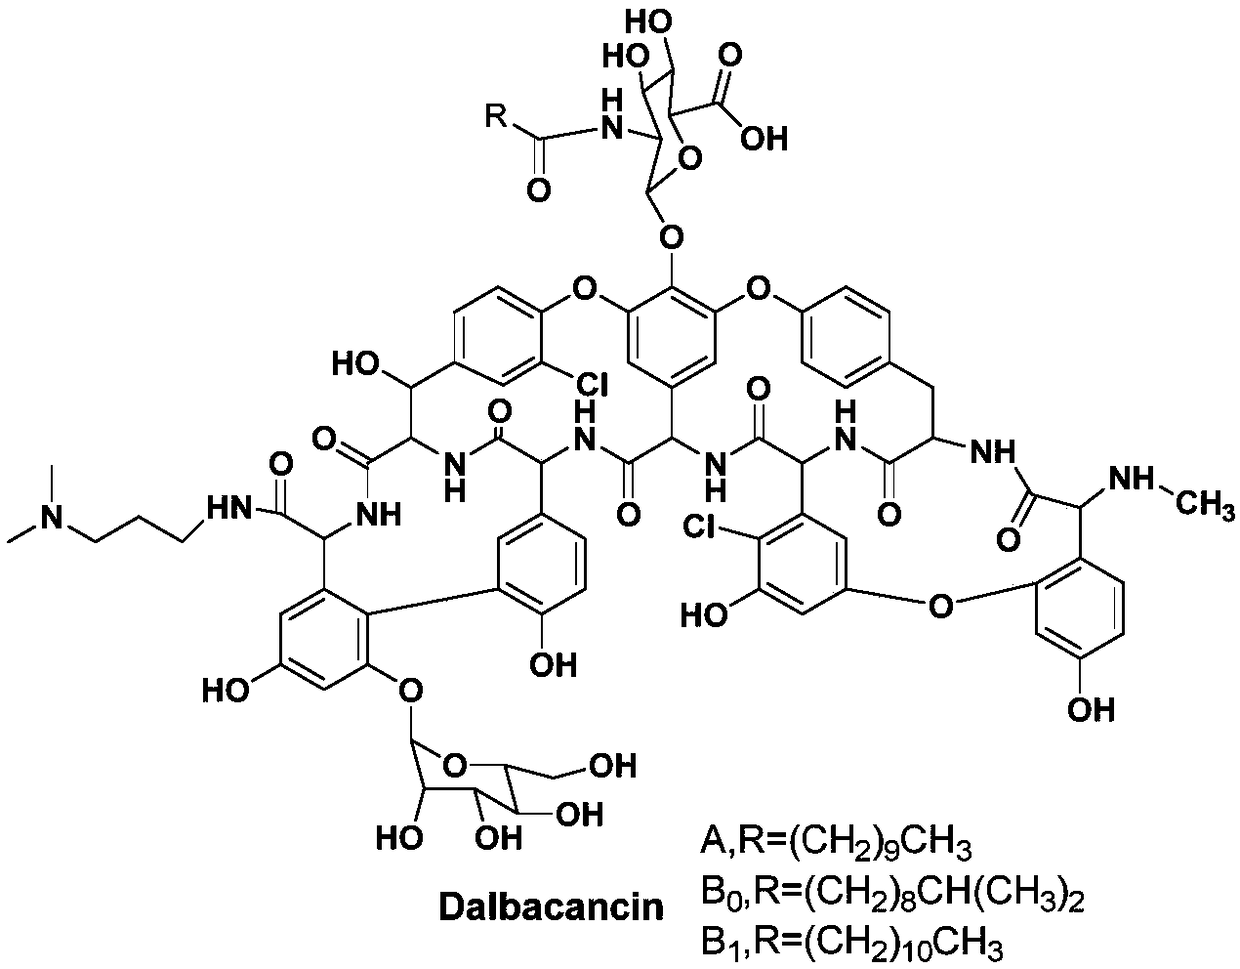 Method for preparing dalbavancin